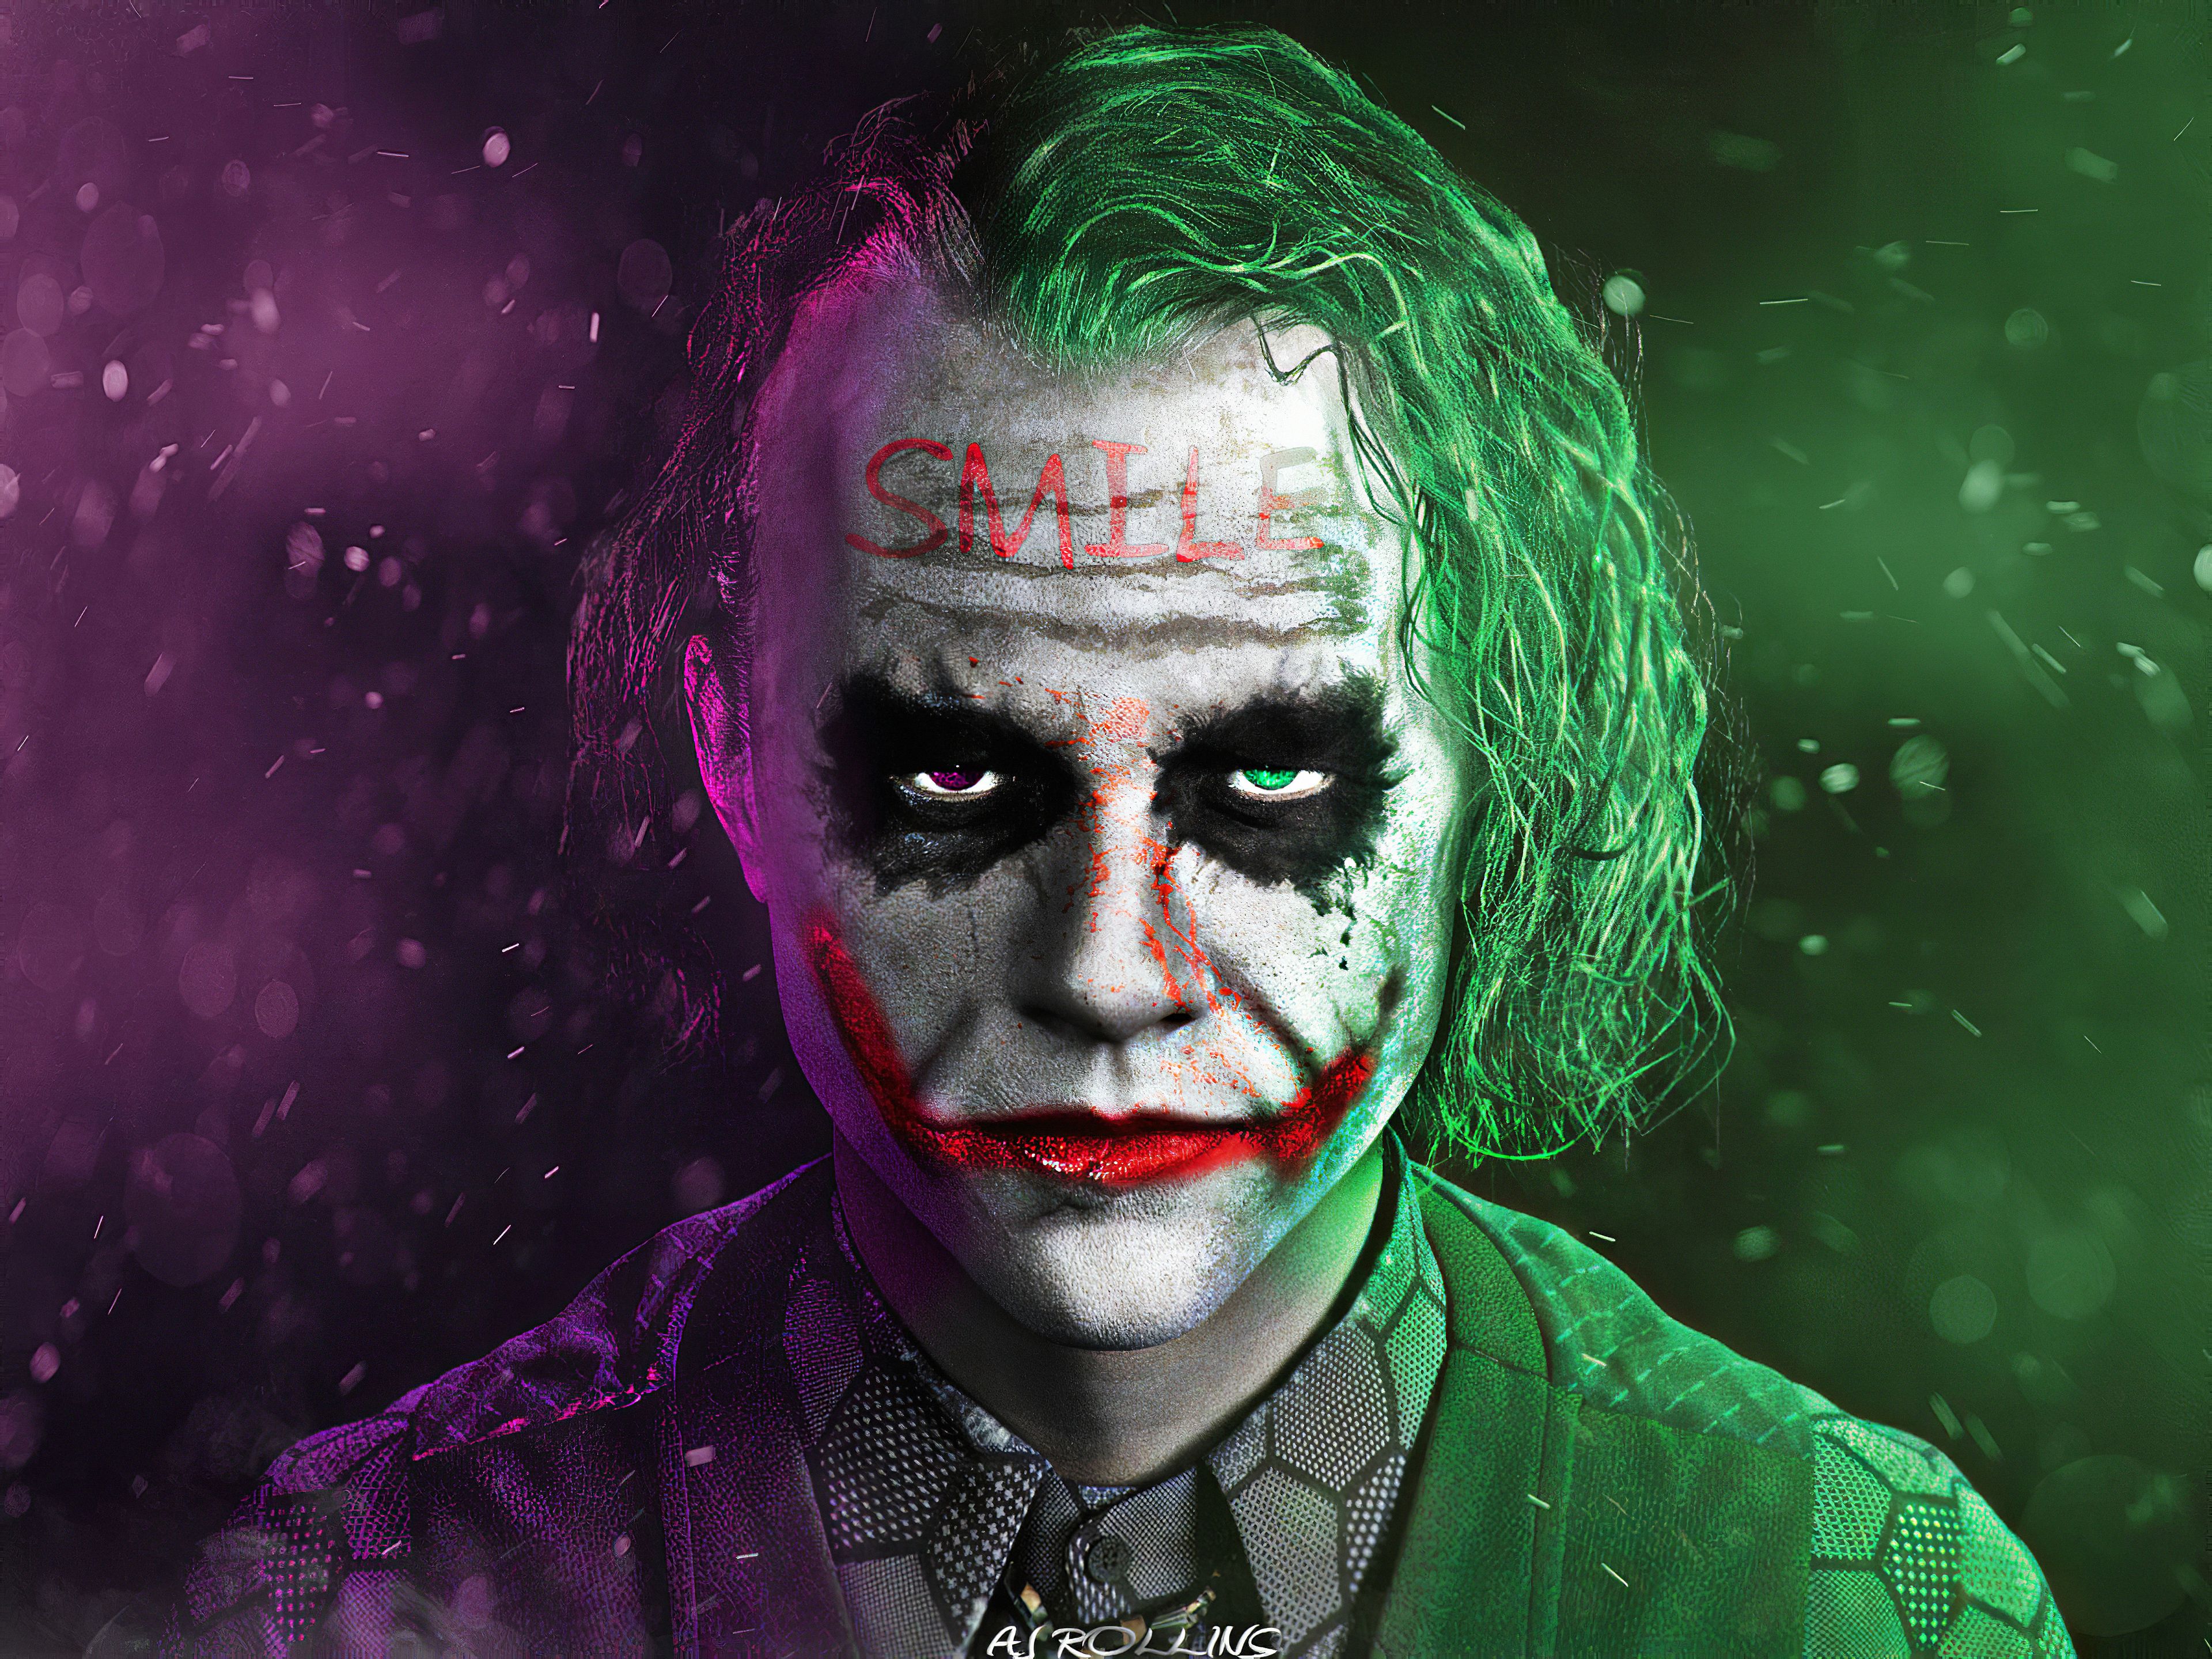 Joker Images Hd Wallpaper Download at Ethel Collier blog